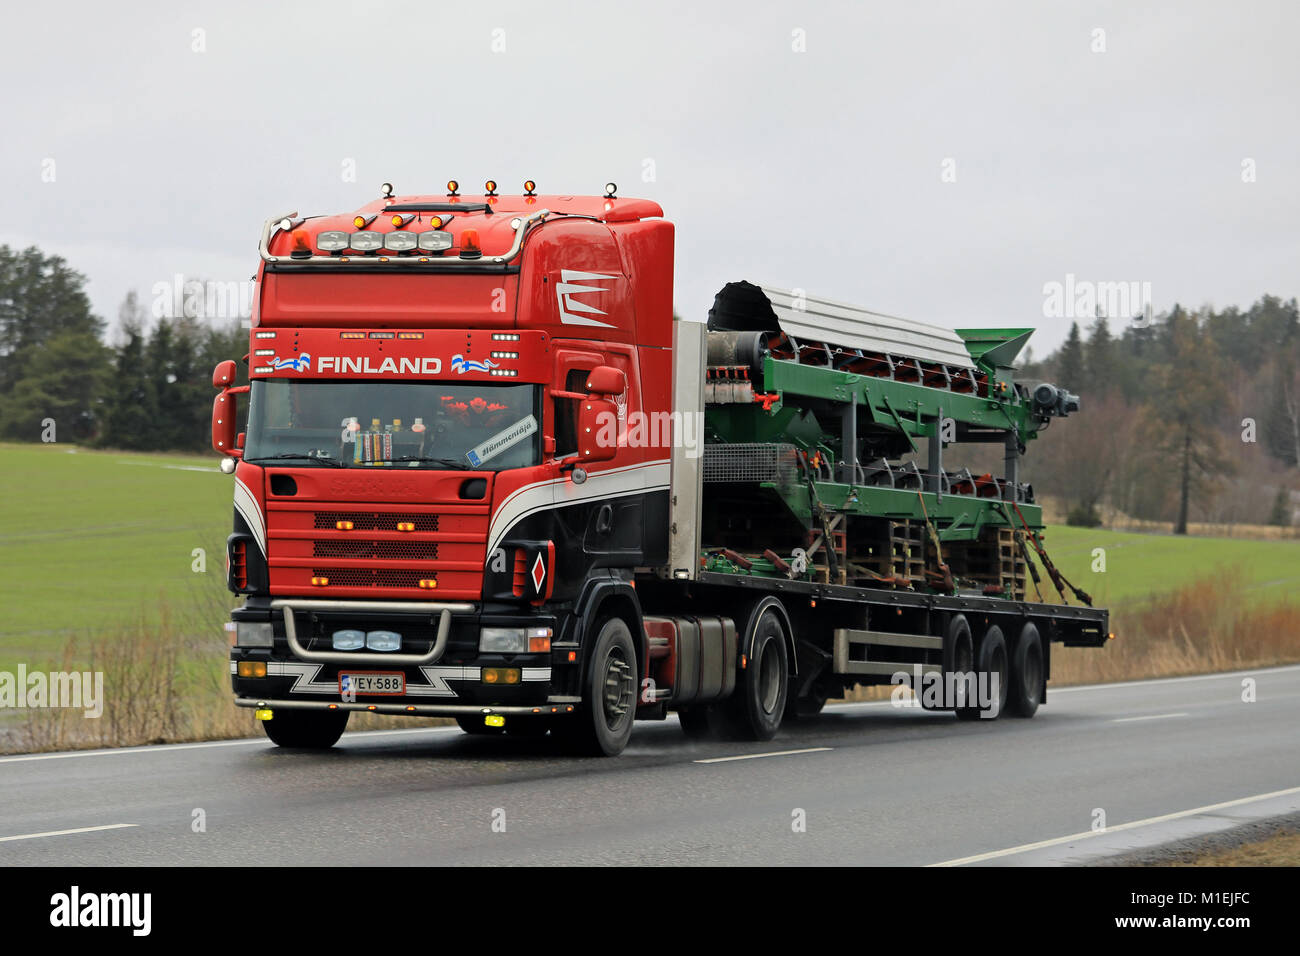 SALO, Finnland - 26. JANUAR 2018: Individuelle 4-Serie Scania Lkw Transporte Maschinen entlang der Landstraße im Süden Finnlands. Stockfoto